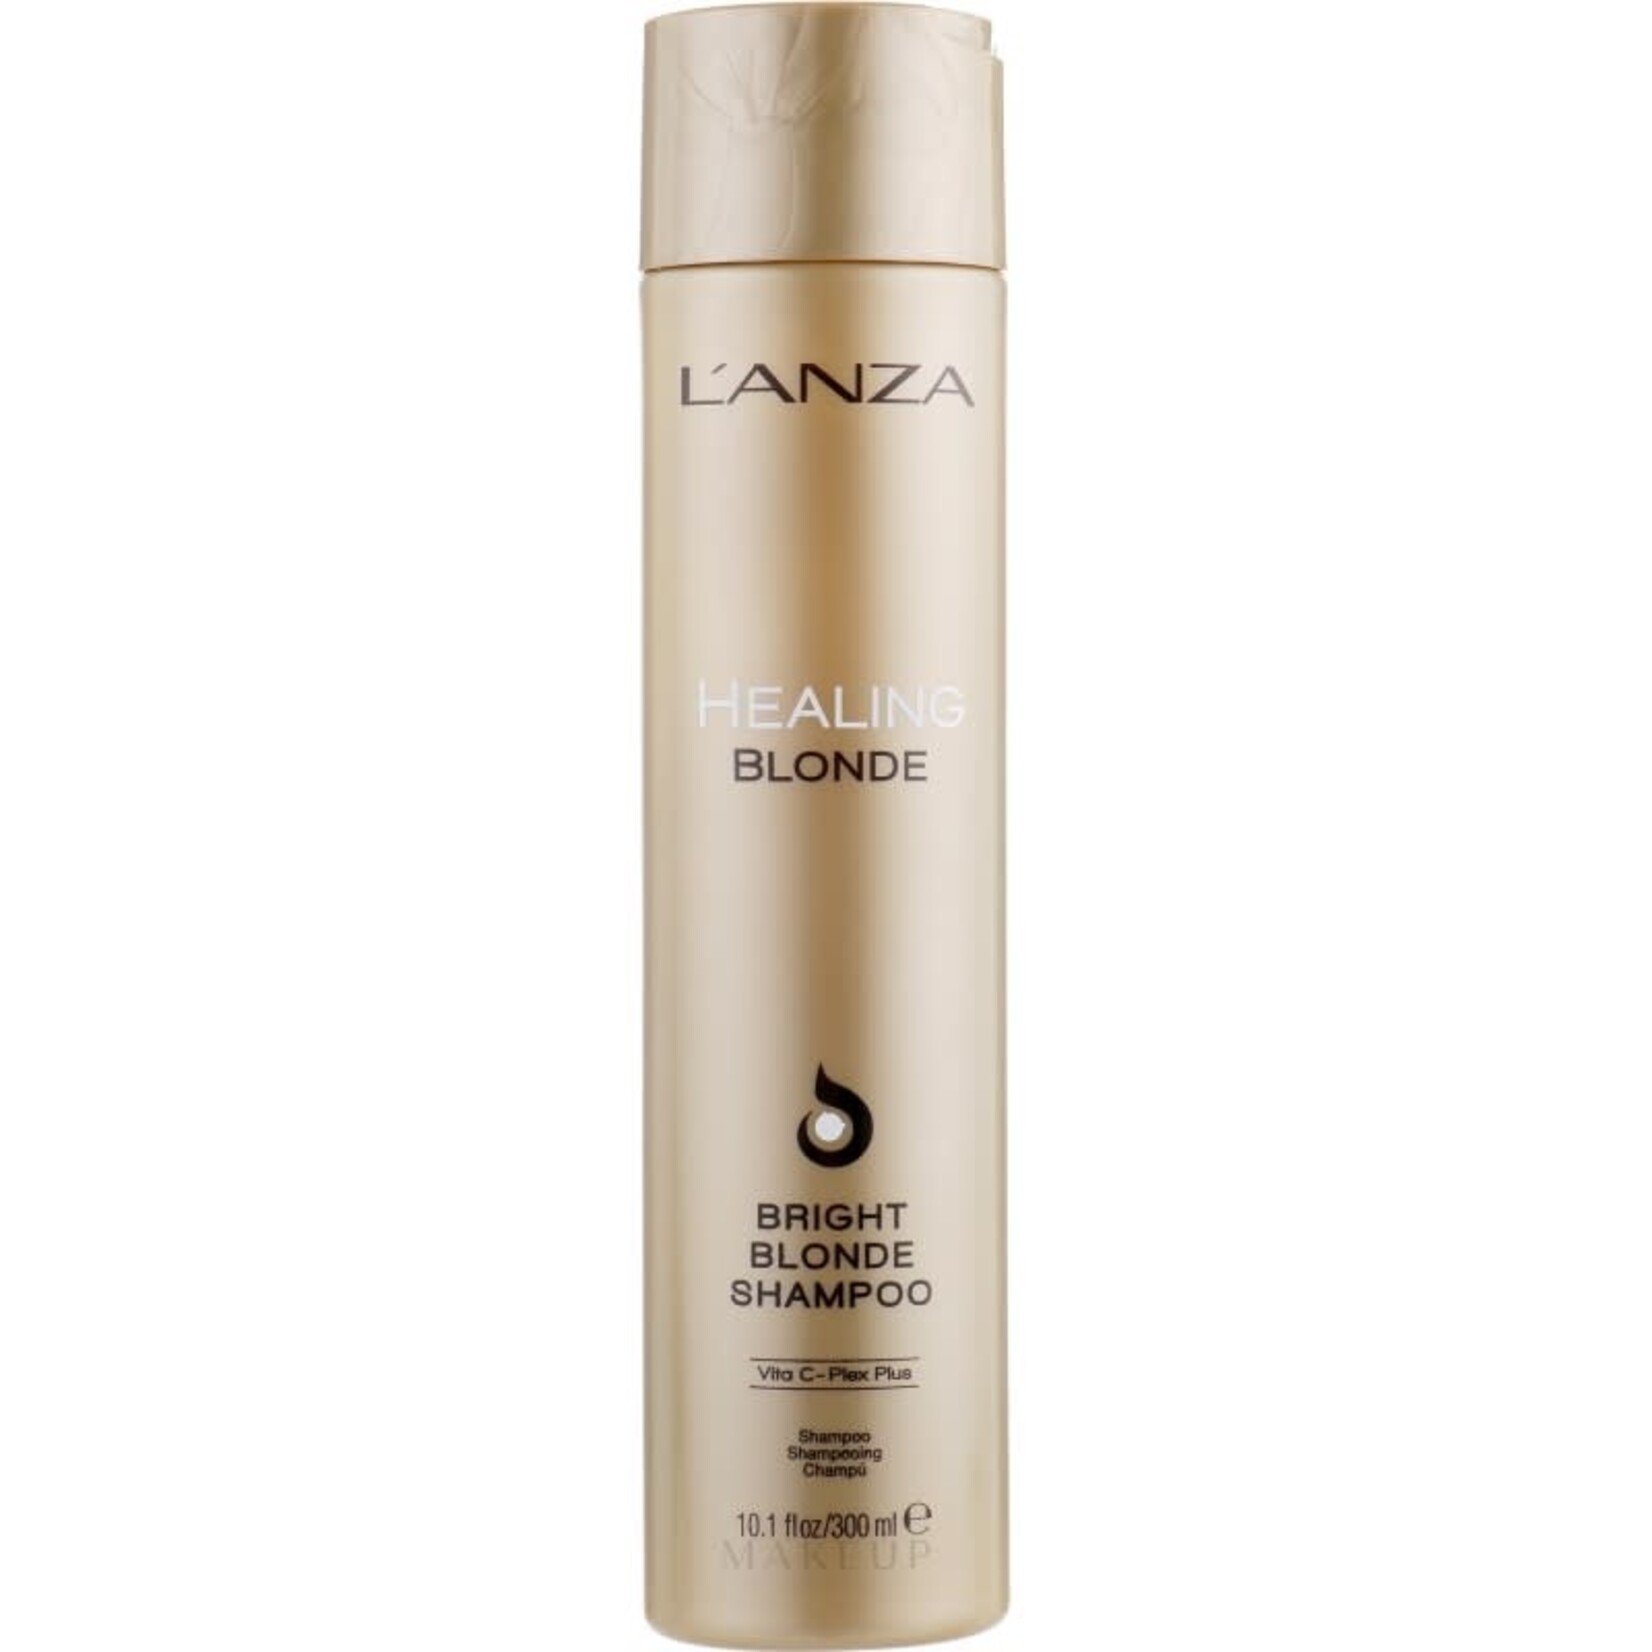 L'Anza L'Anza - Healing Blonde - Shampoo 300ml